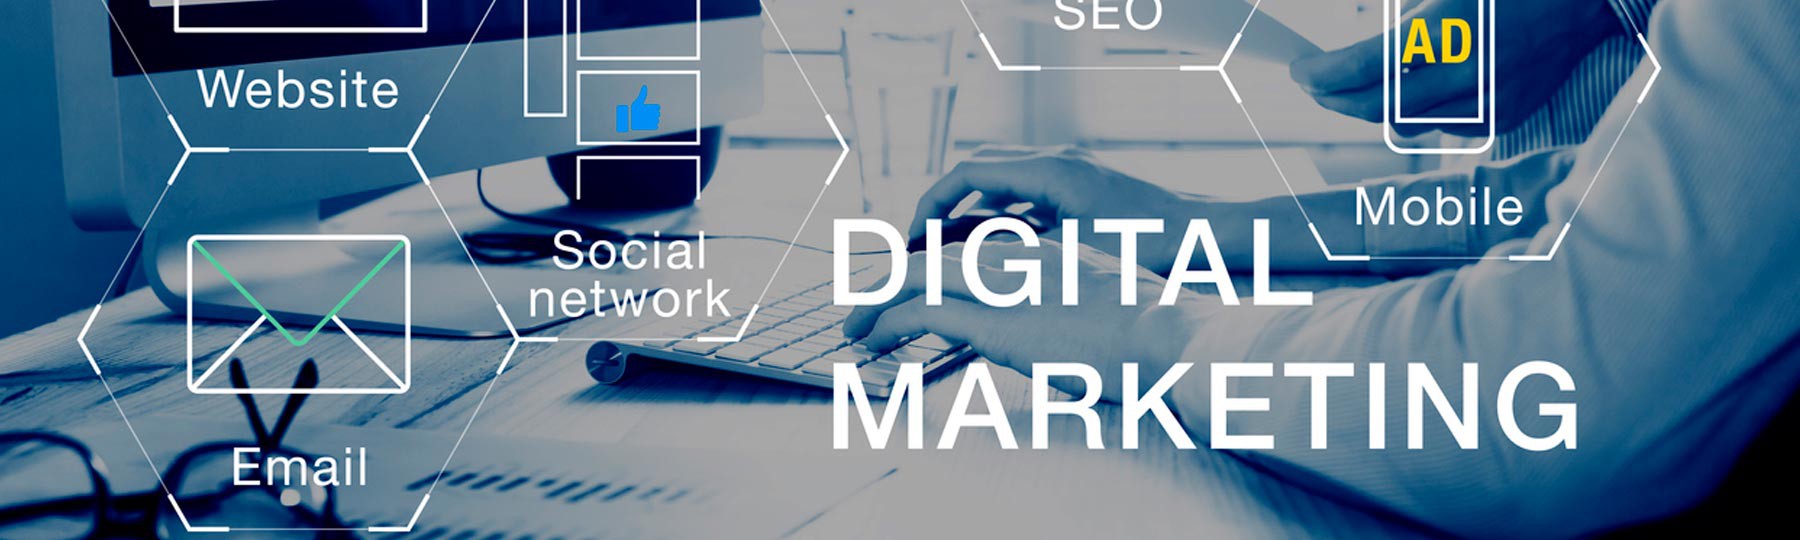 herramientas marketing digital Adex